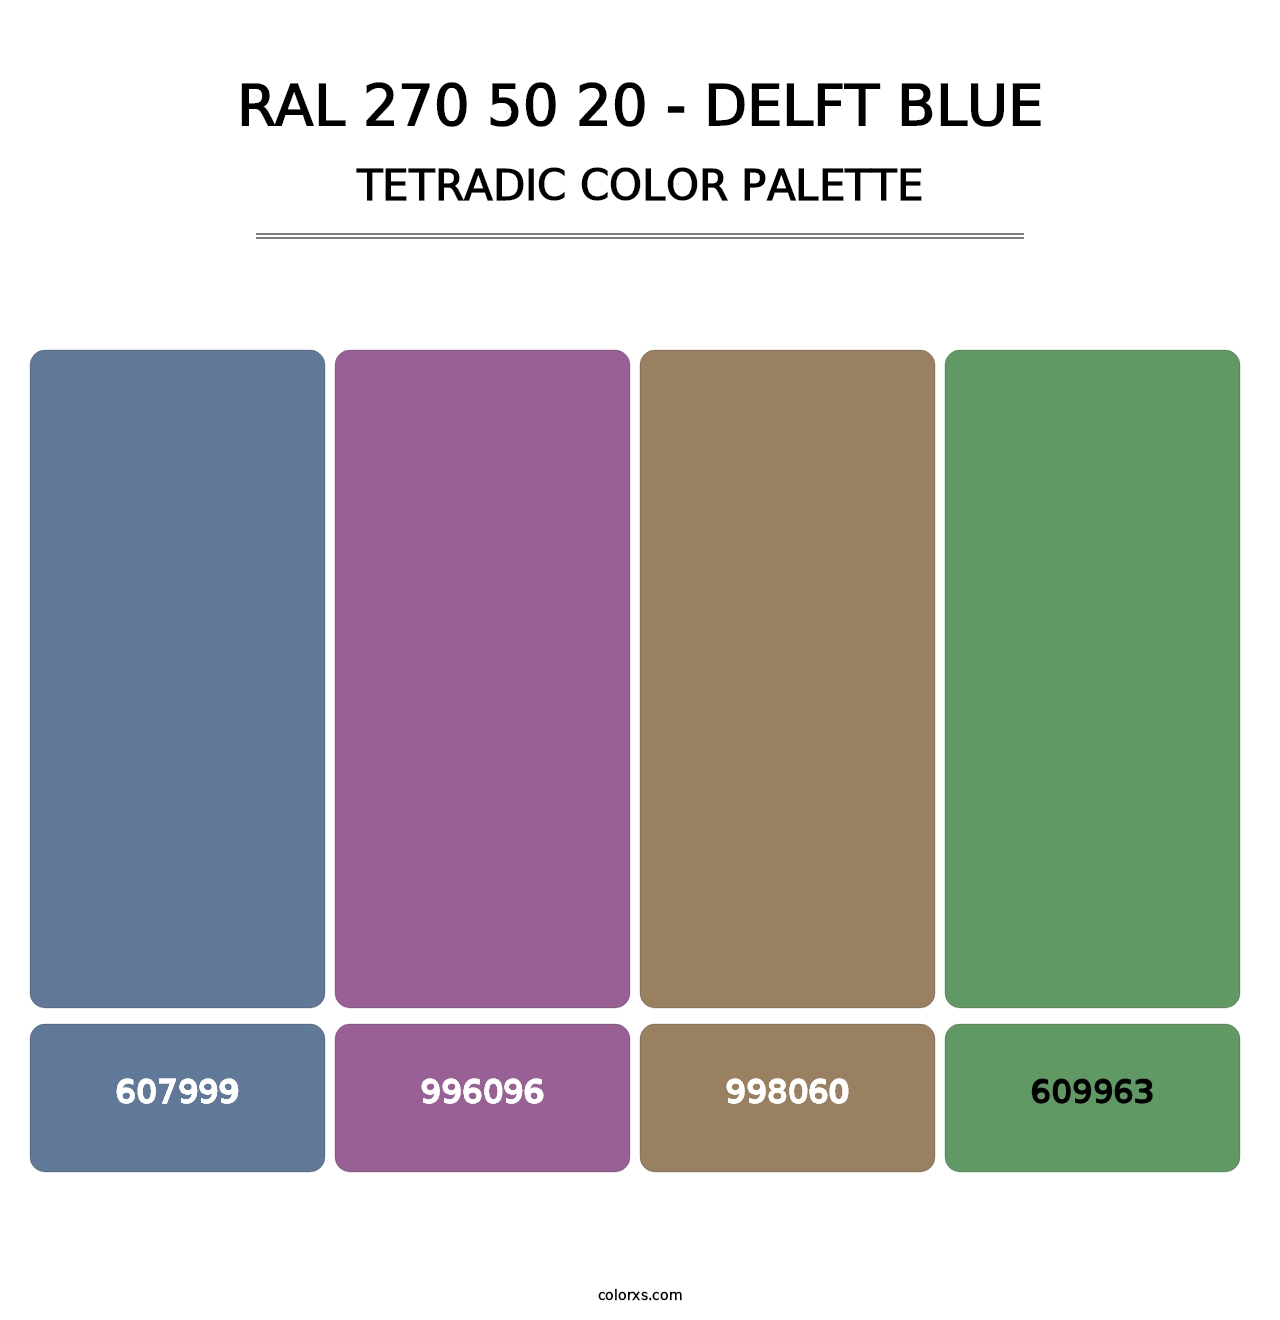 RAL 270 50 20 - Delft Blue - Tetradic Color Palette